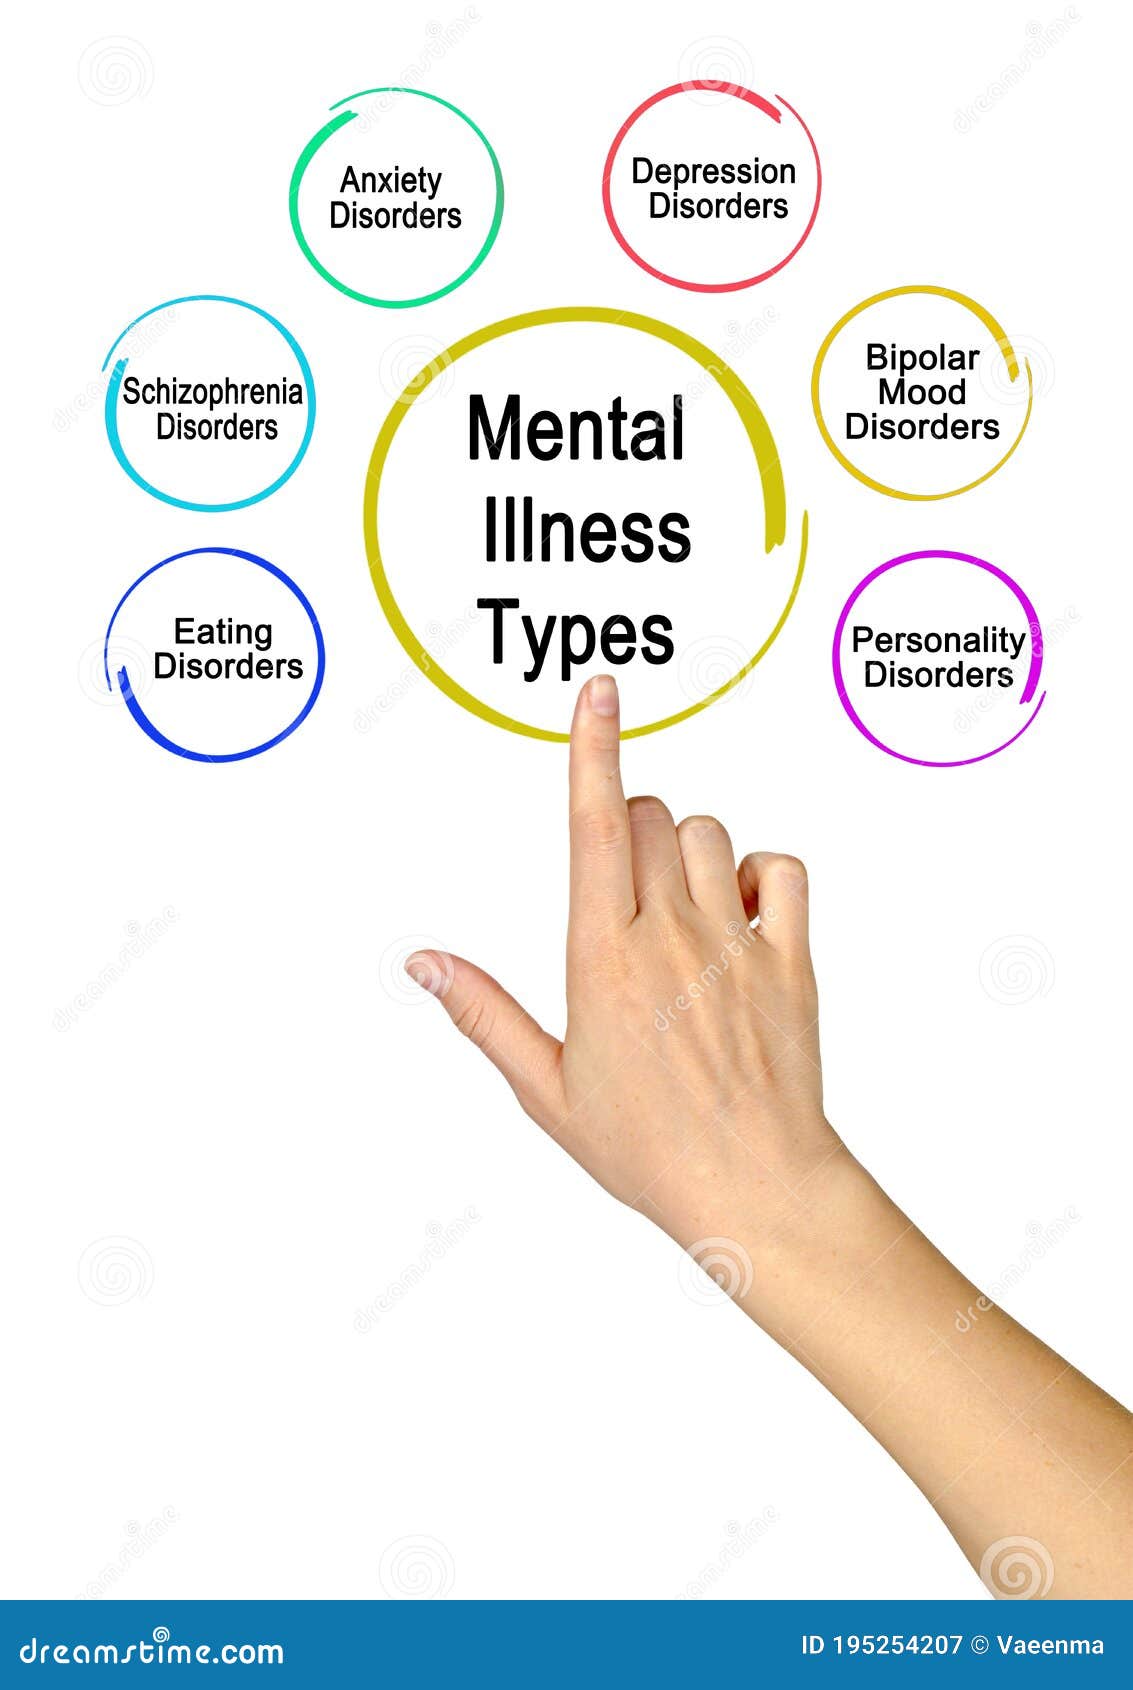 types of mental illness